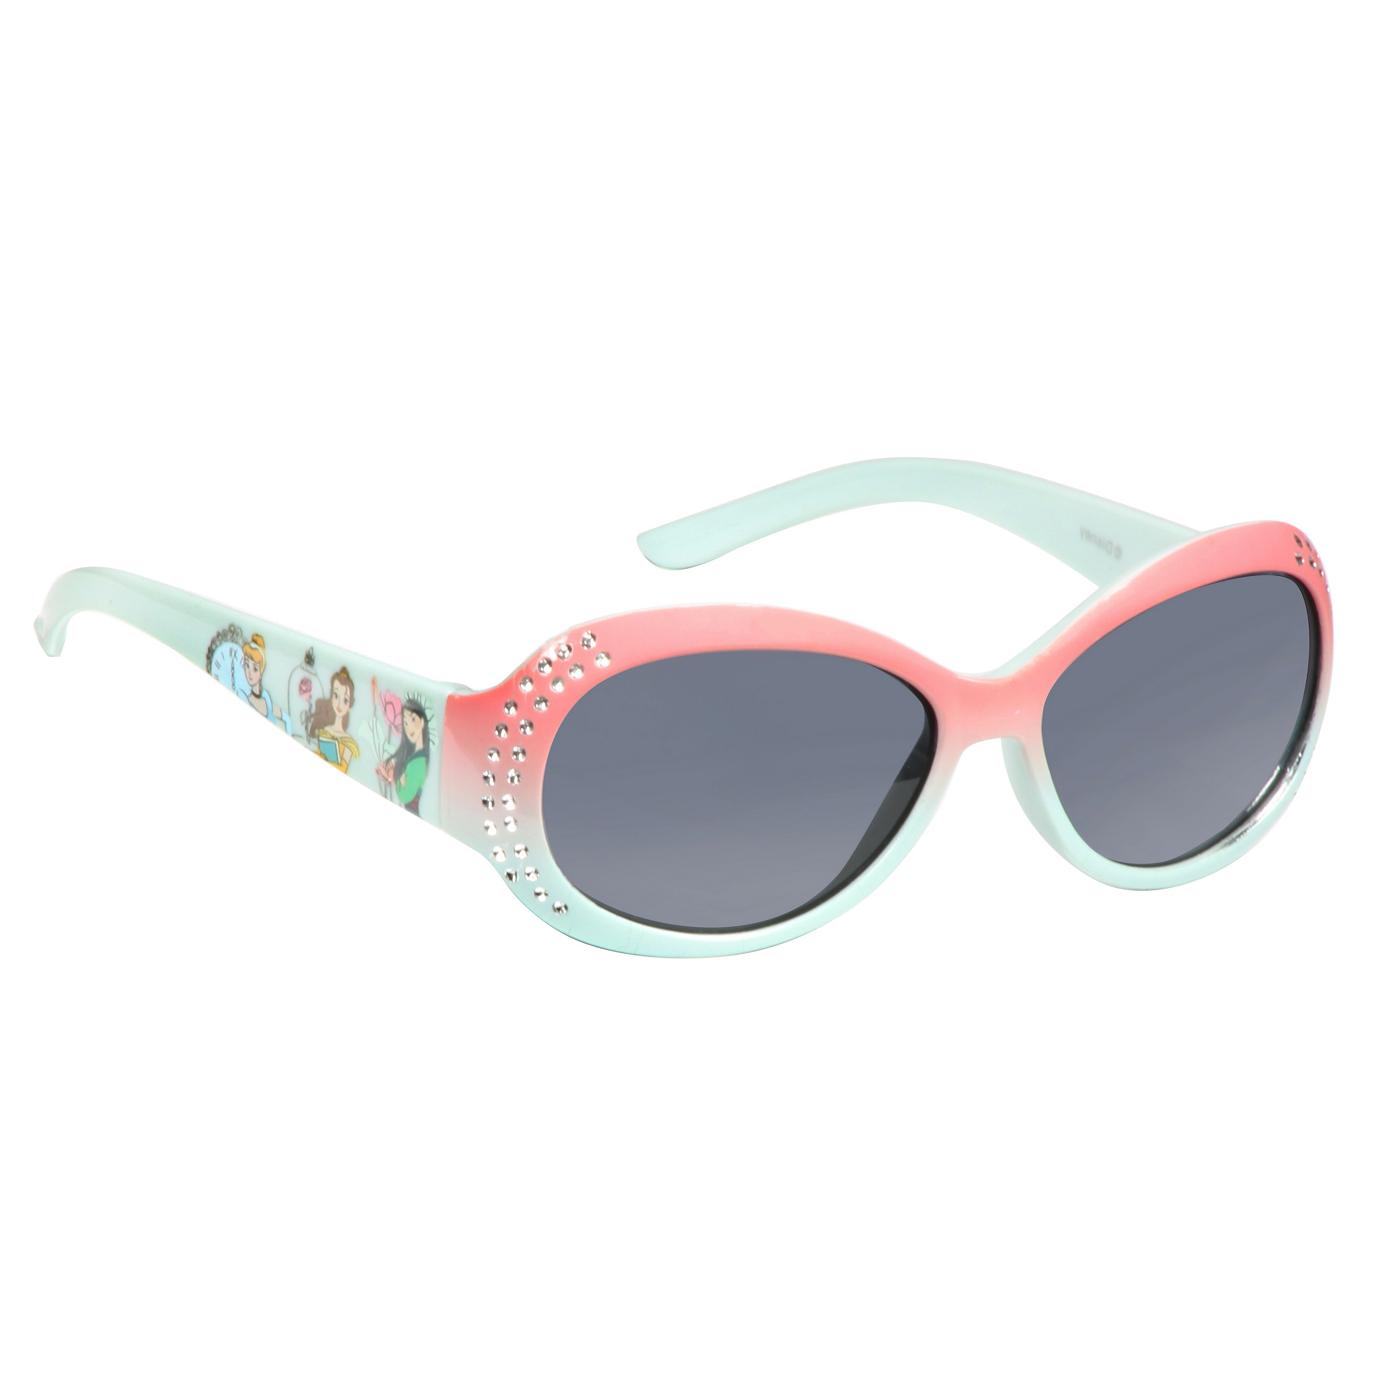 Select A Vision Kids Disney Princesses Sunglasses; image 1 of 2